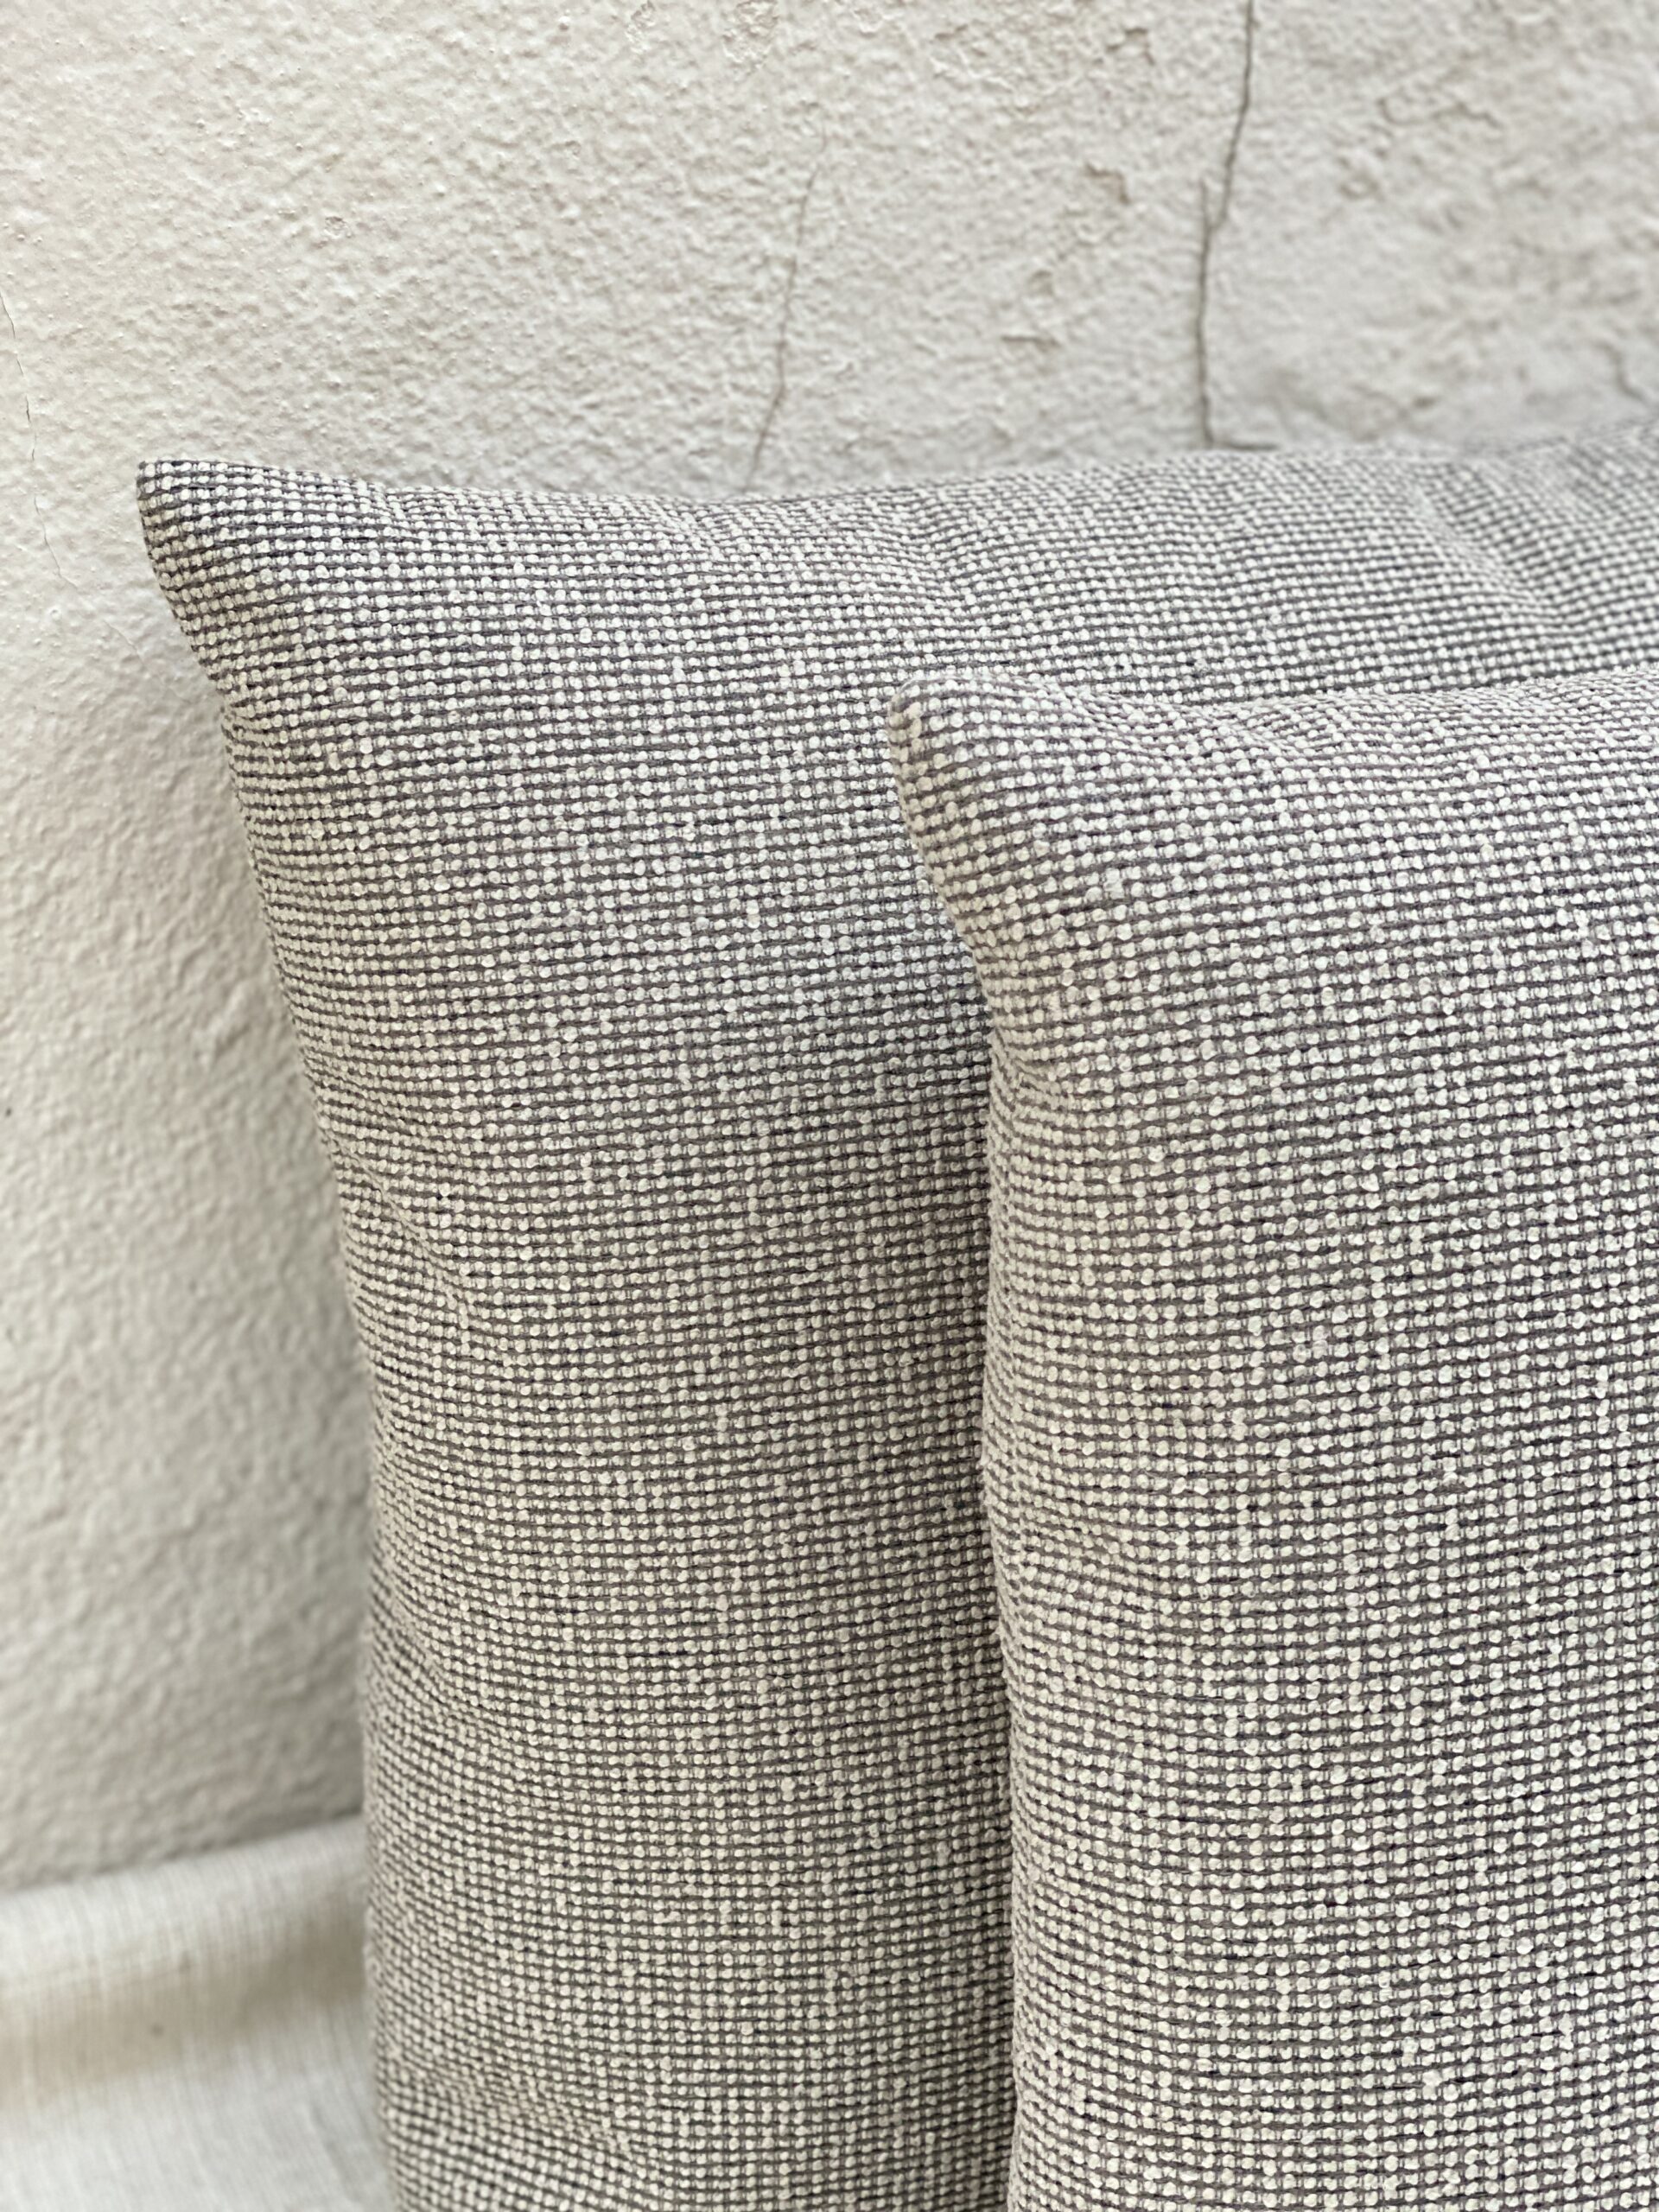 Mayer Fabrics Form Pillows